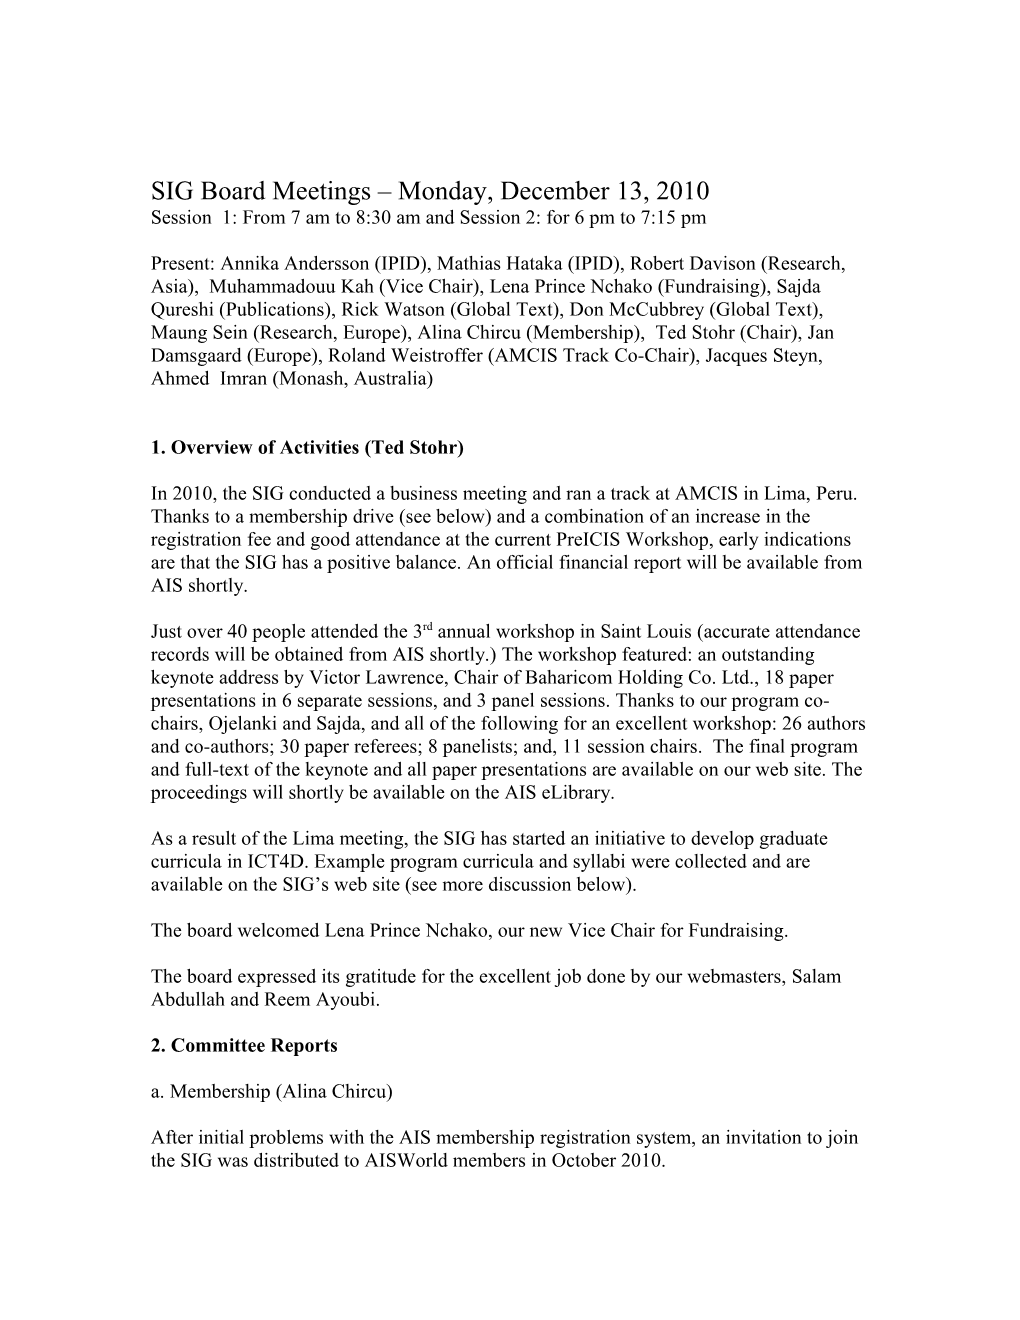 SIG Board Meetings Monday, December 13, 2010